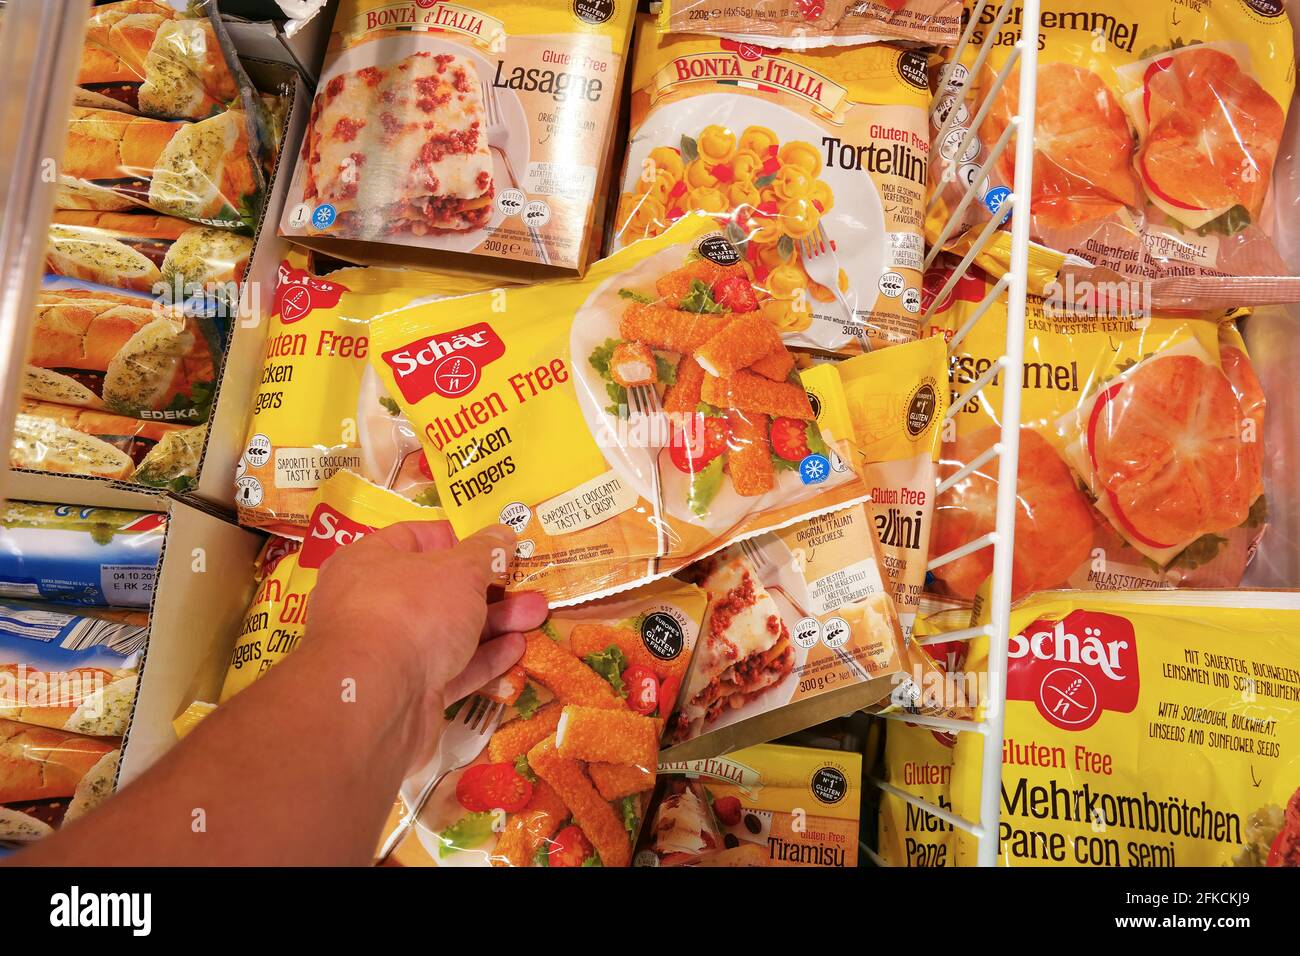 Schär gluten-free foods in de freezer of a Supermarket Stock Photo